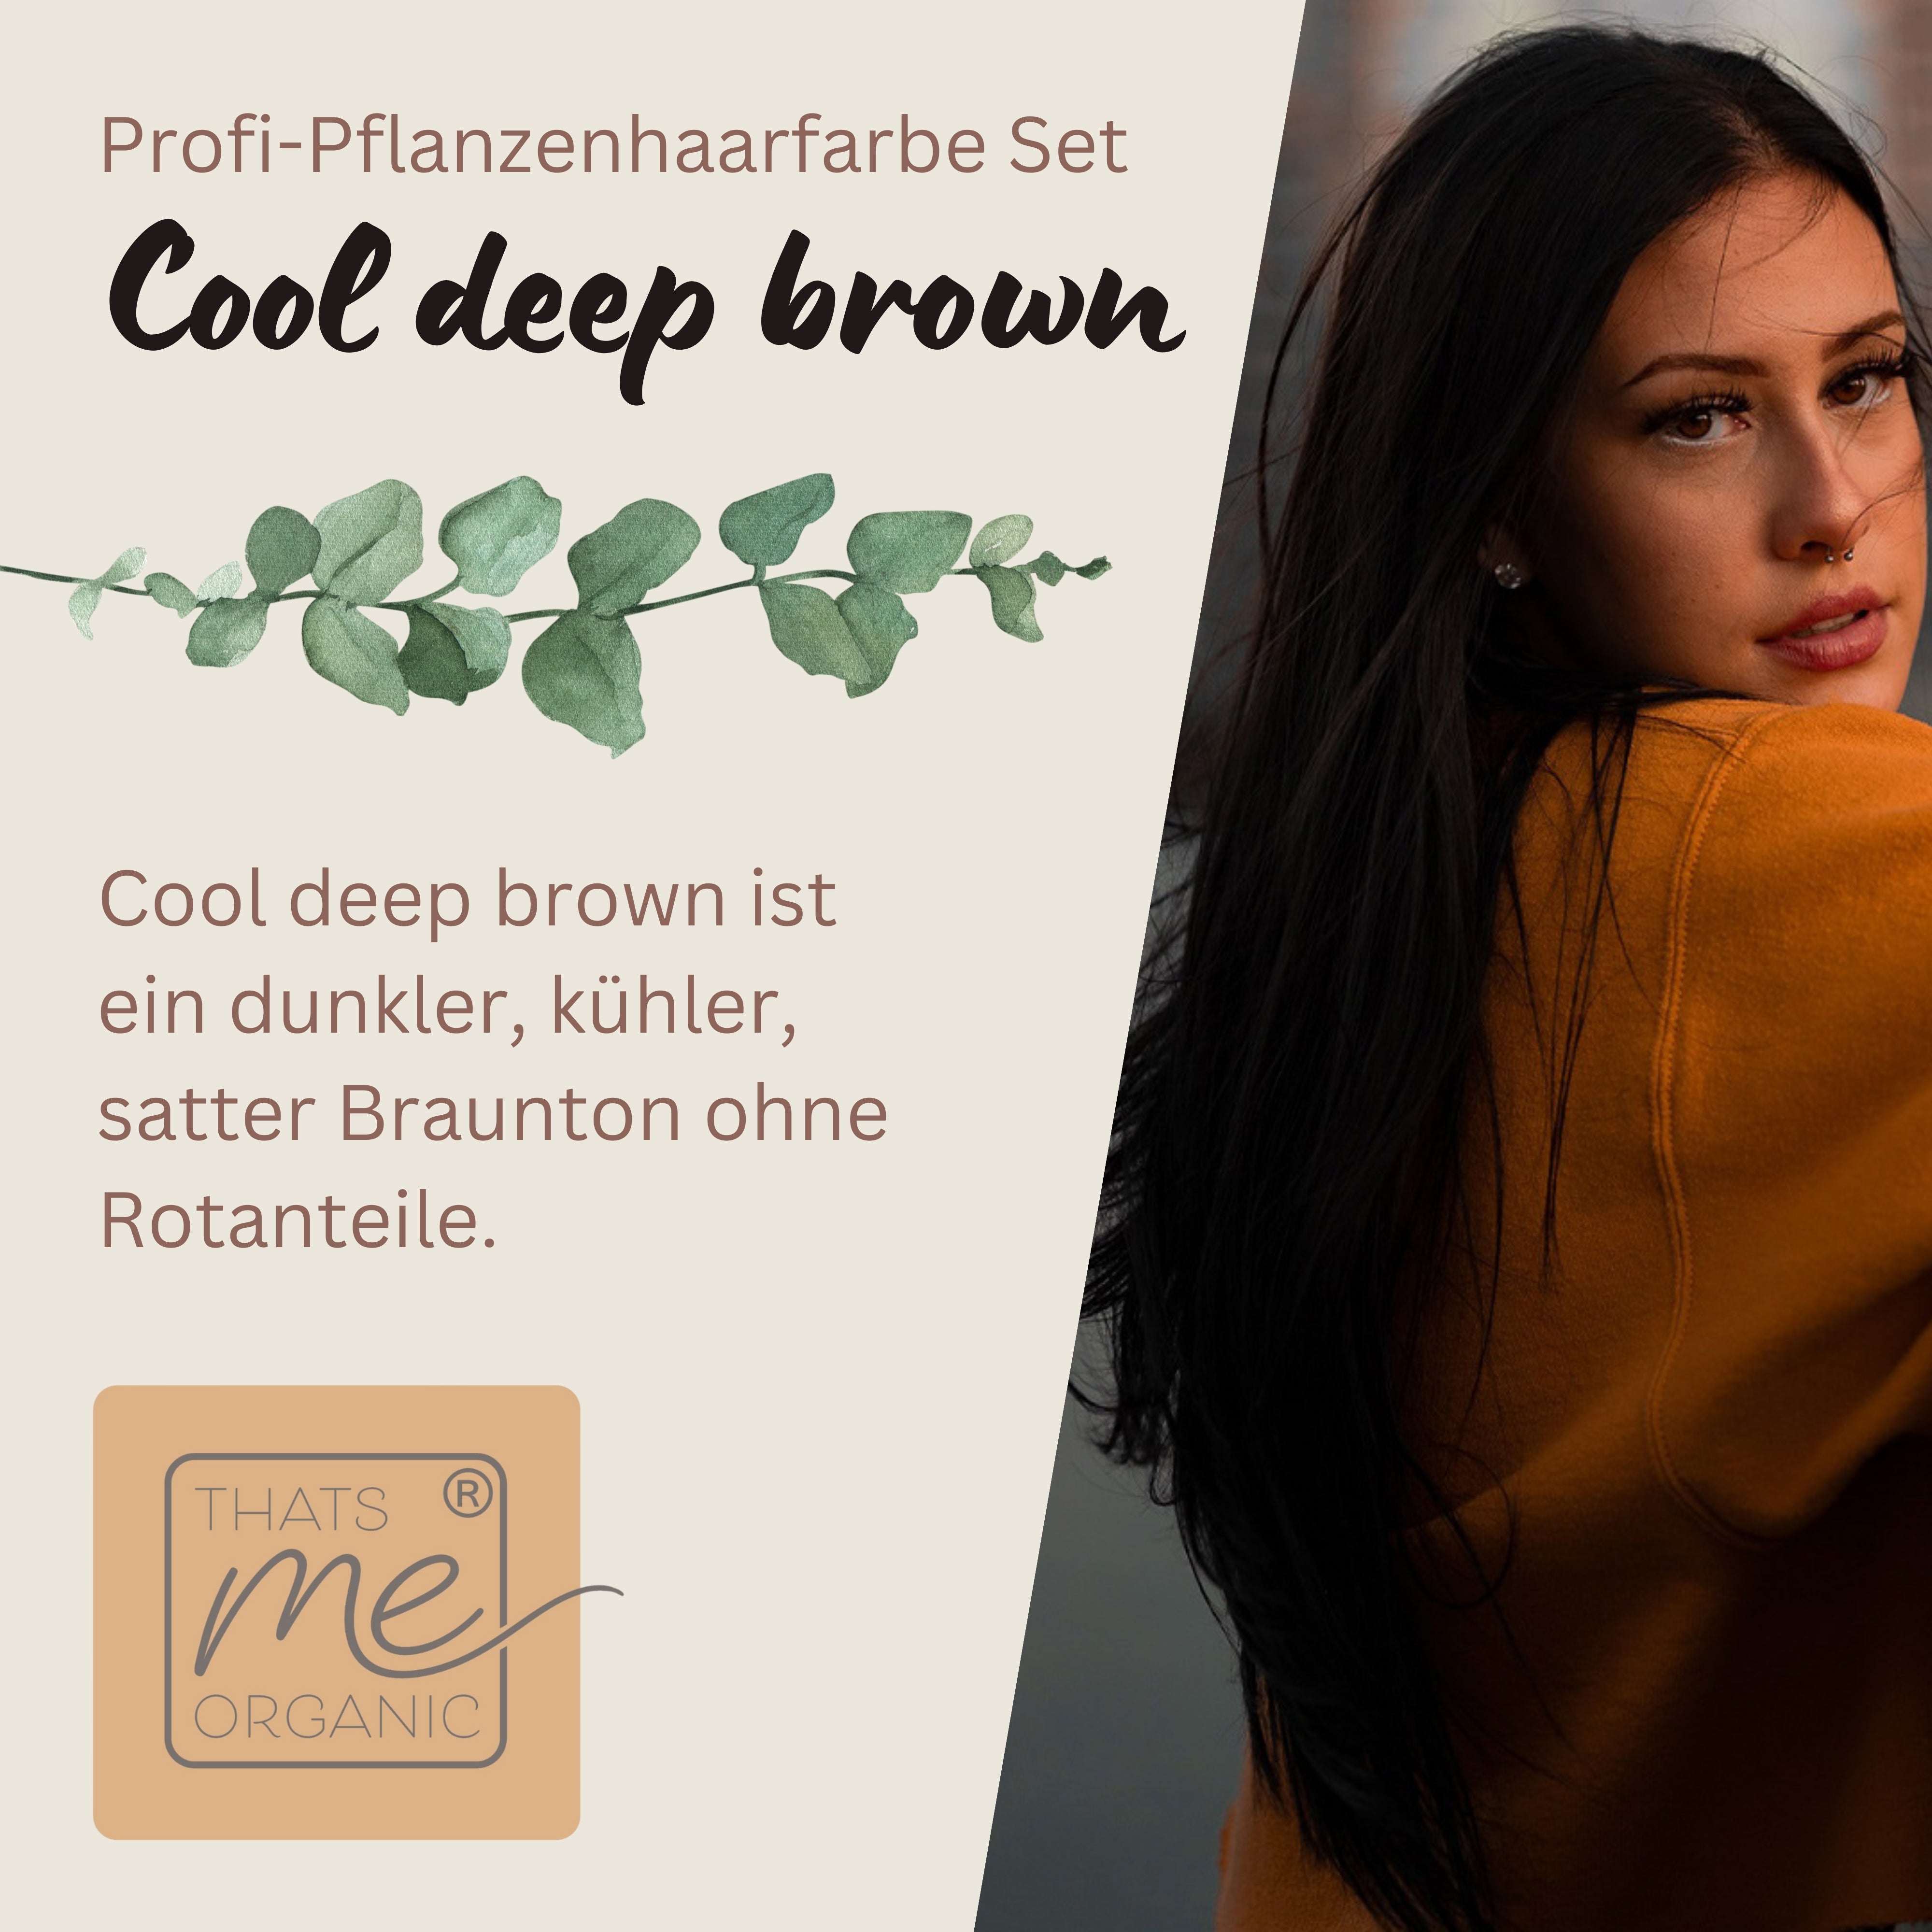 Profi-Pflanzenhaarfarbe kühles dunkles Braun "cool deep brown" 90g Nachfüllpack